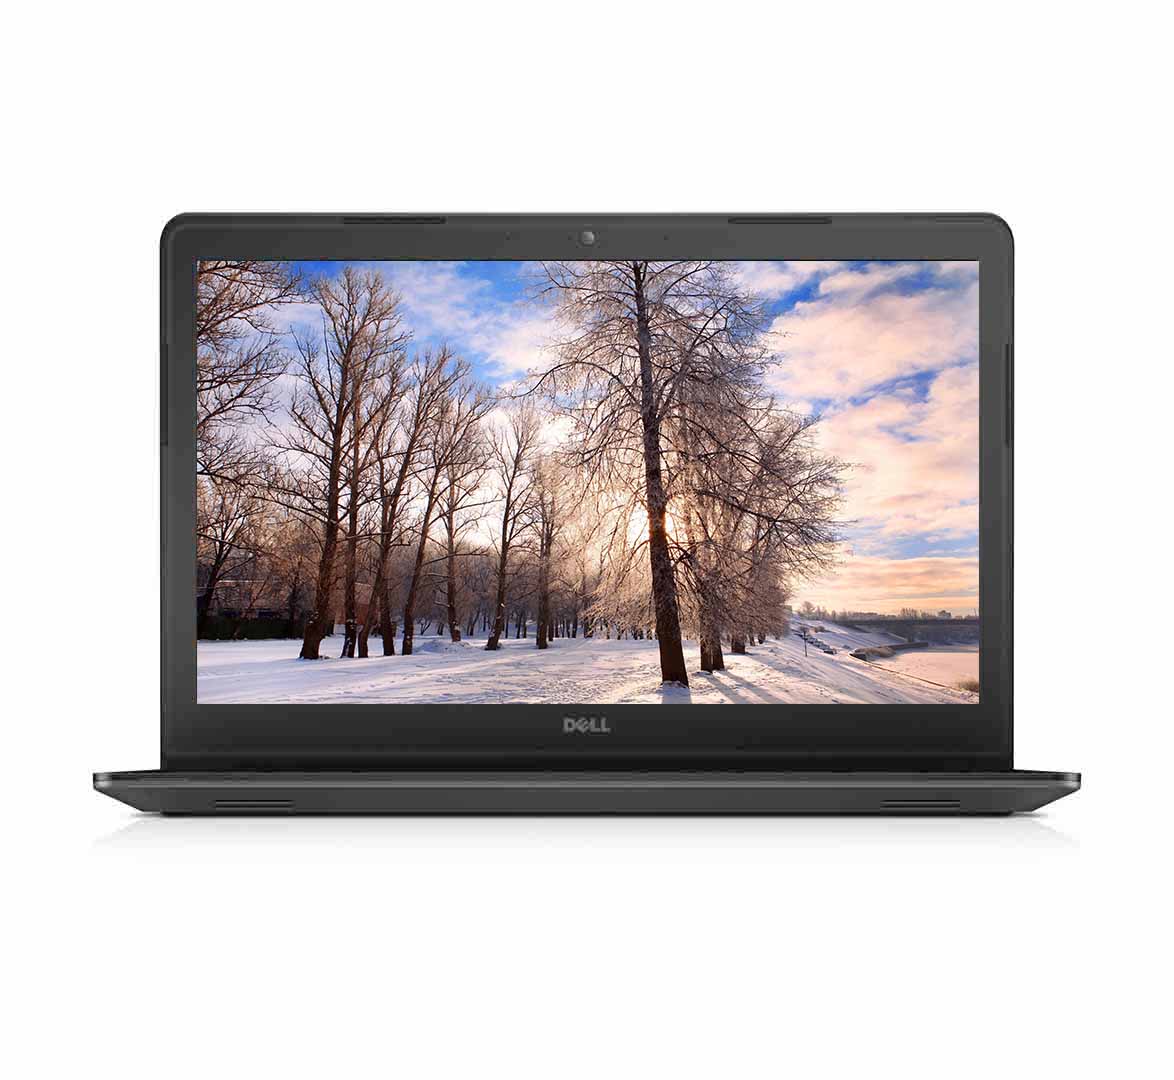 Dell Latitude E3550 Business Laptop, Intel Core i3-5th Generation CPU, 4GB RAM, 500GB HDD, 15.6 inch Display, Windows 10 Pro, Refurbished Laptop